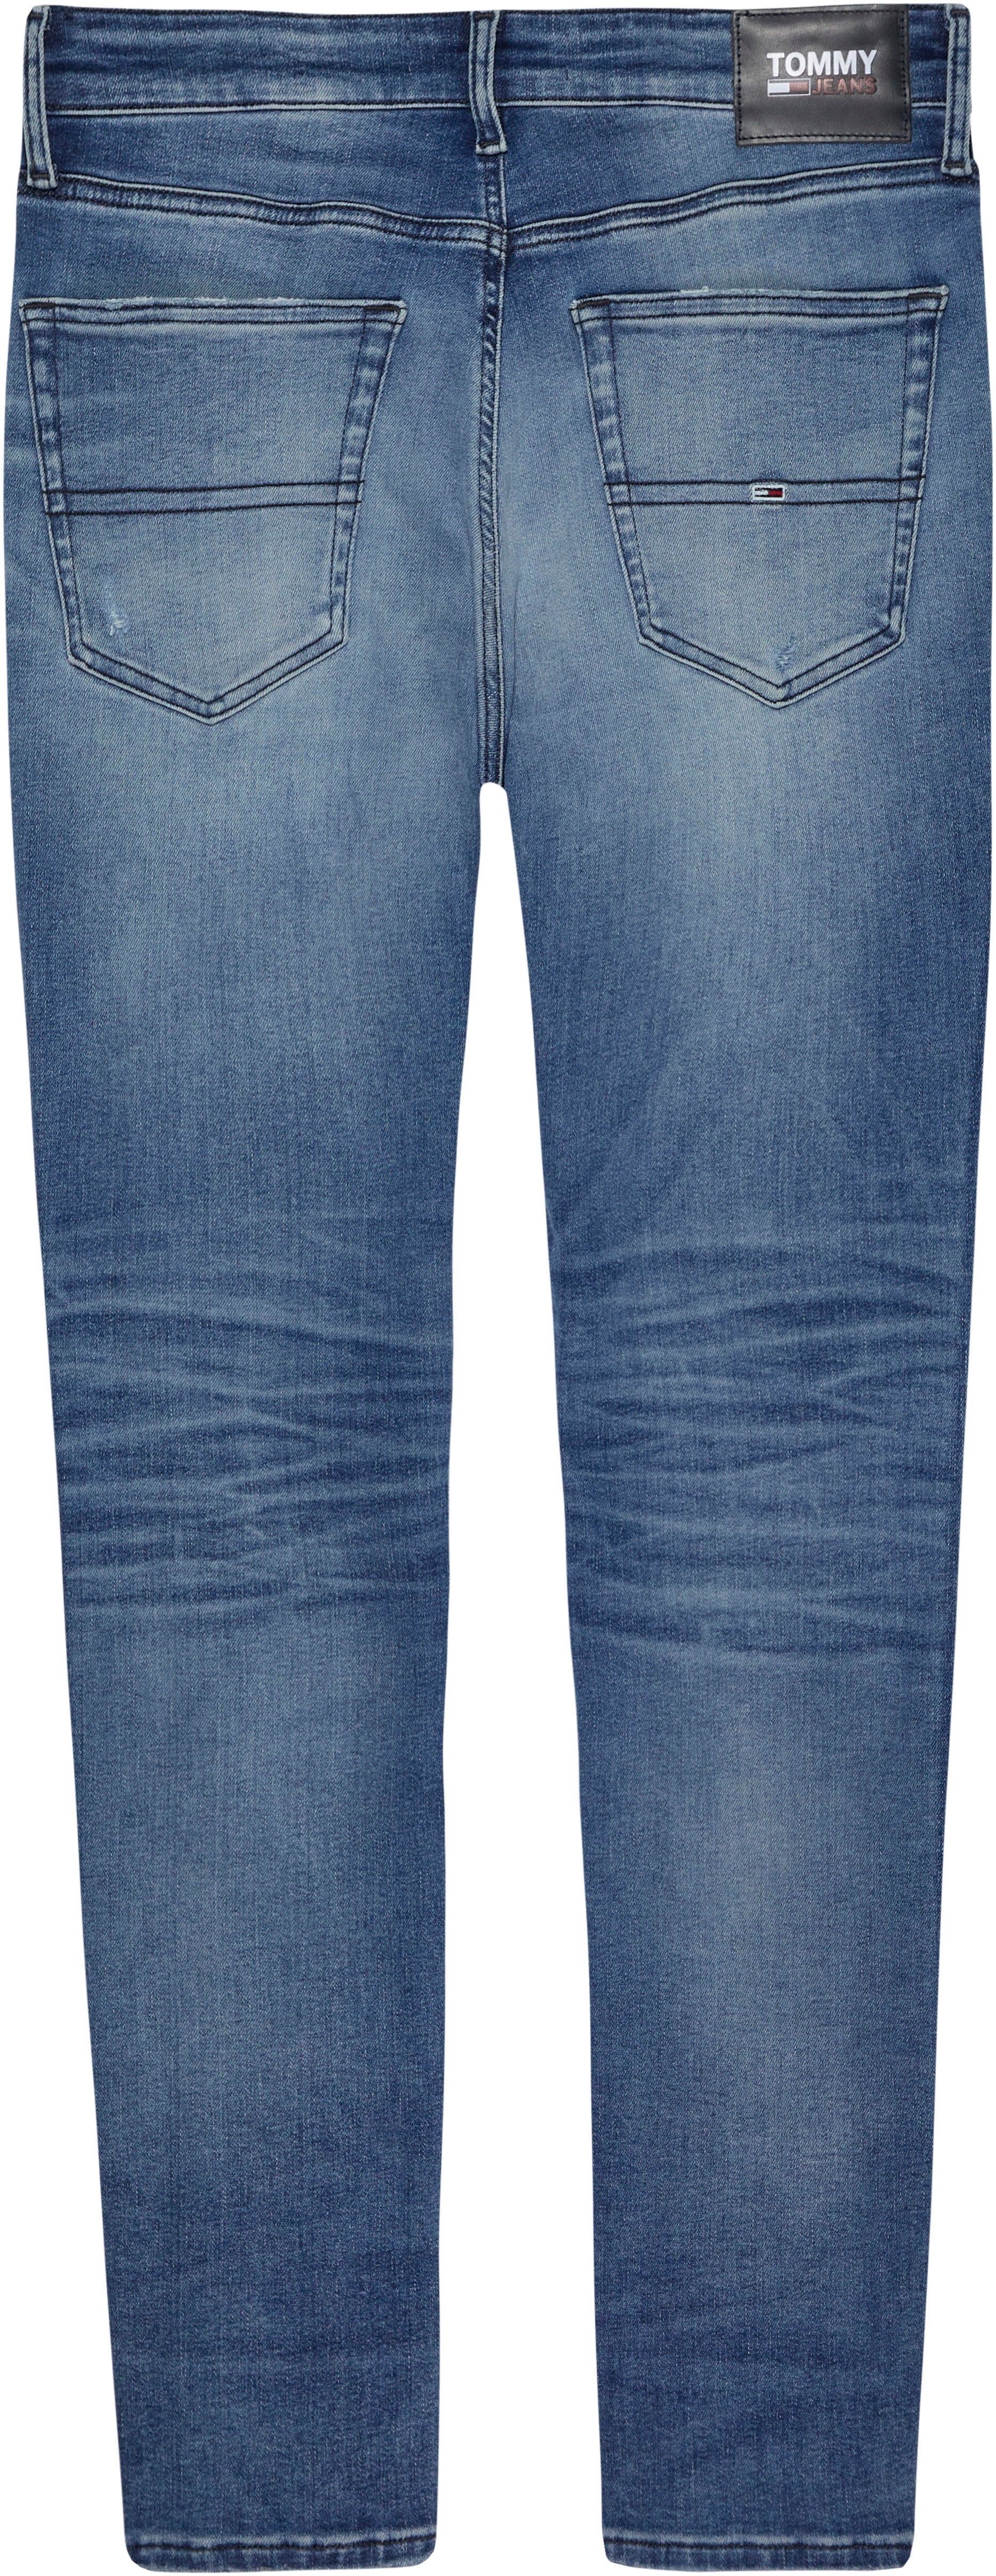 Jeans SLIM Denim Medium SCANTON Tommy 5-Pocket-Jeans